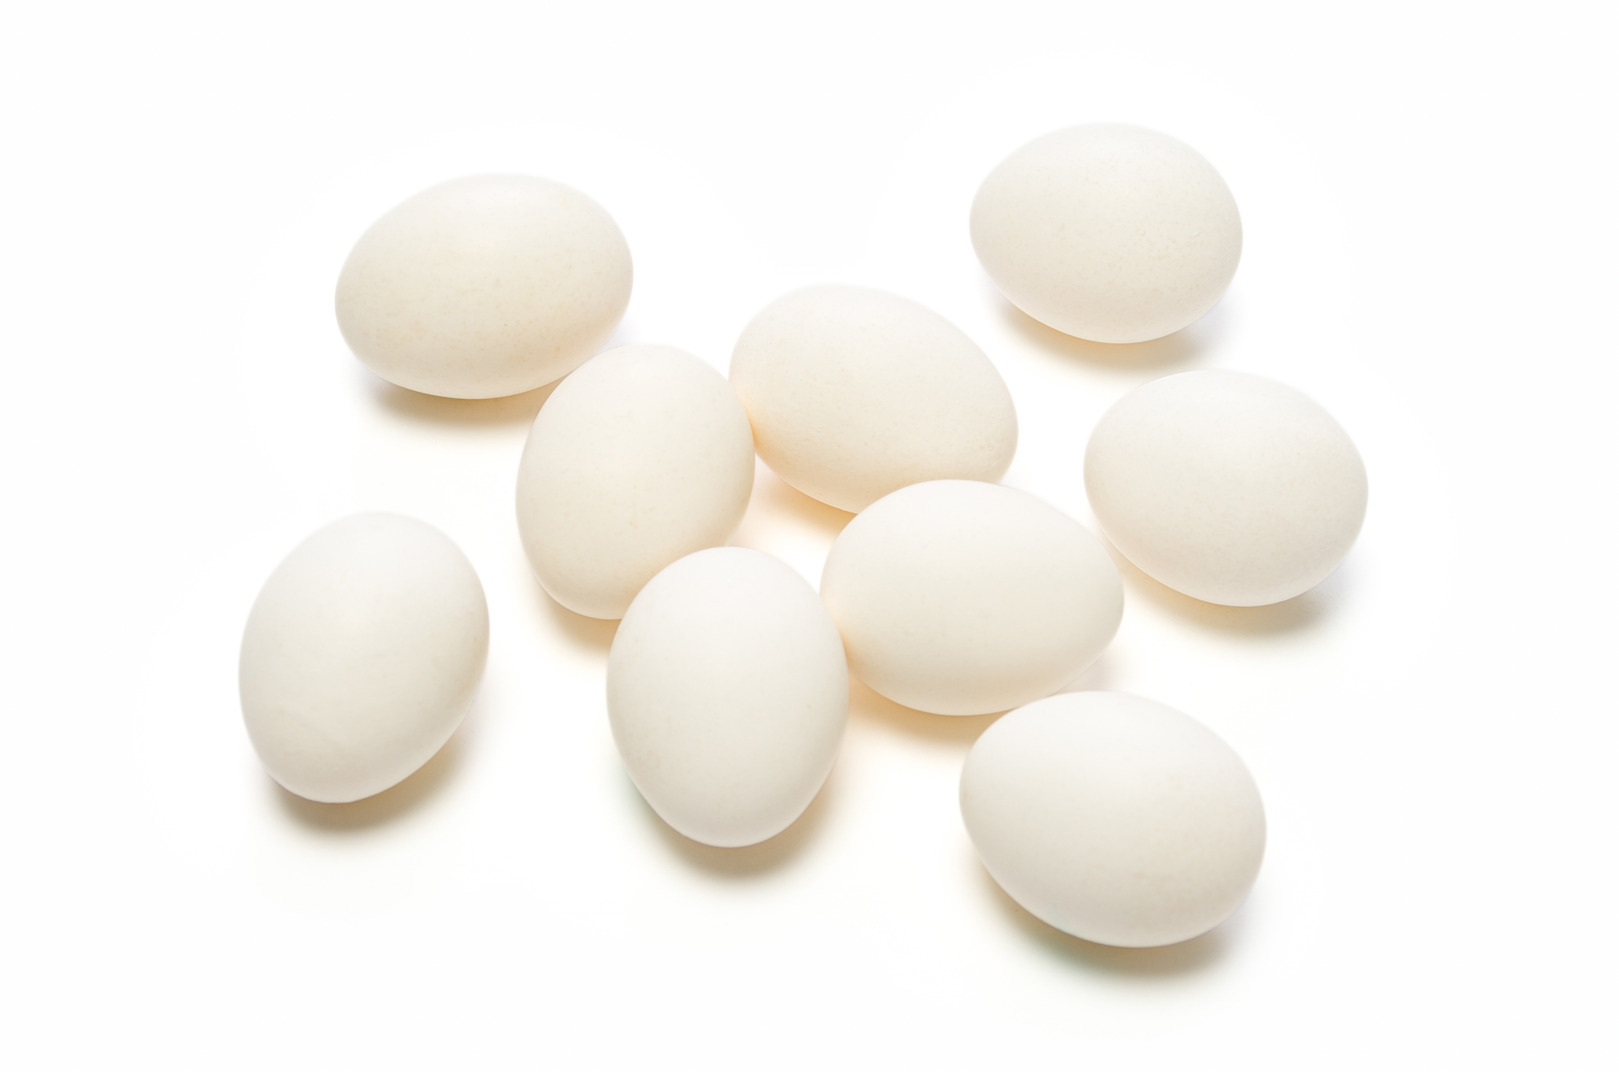 White chicken eggs on a white background